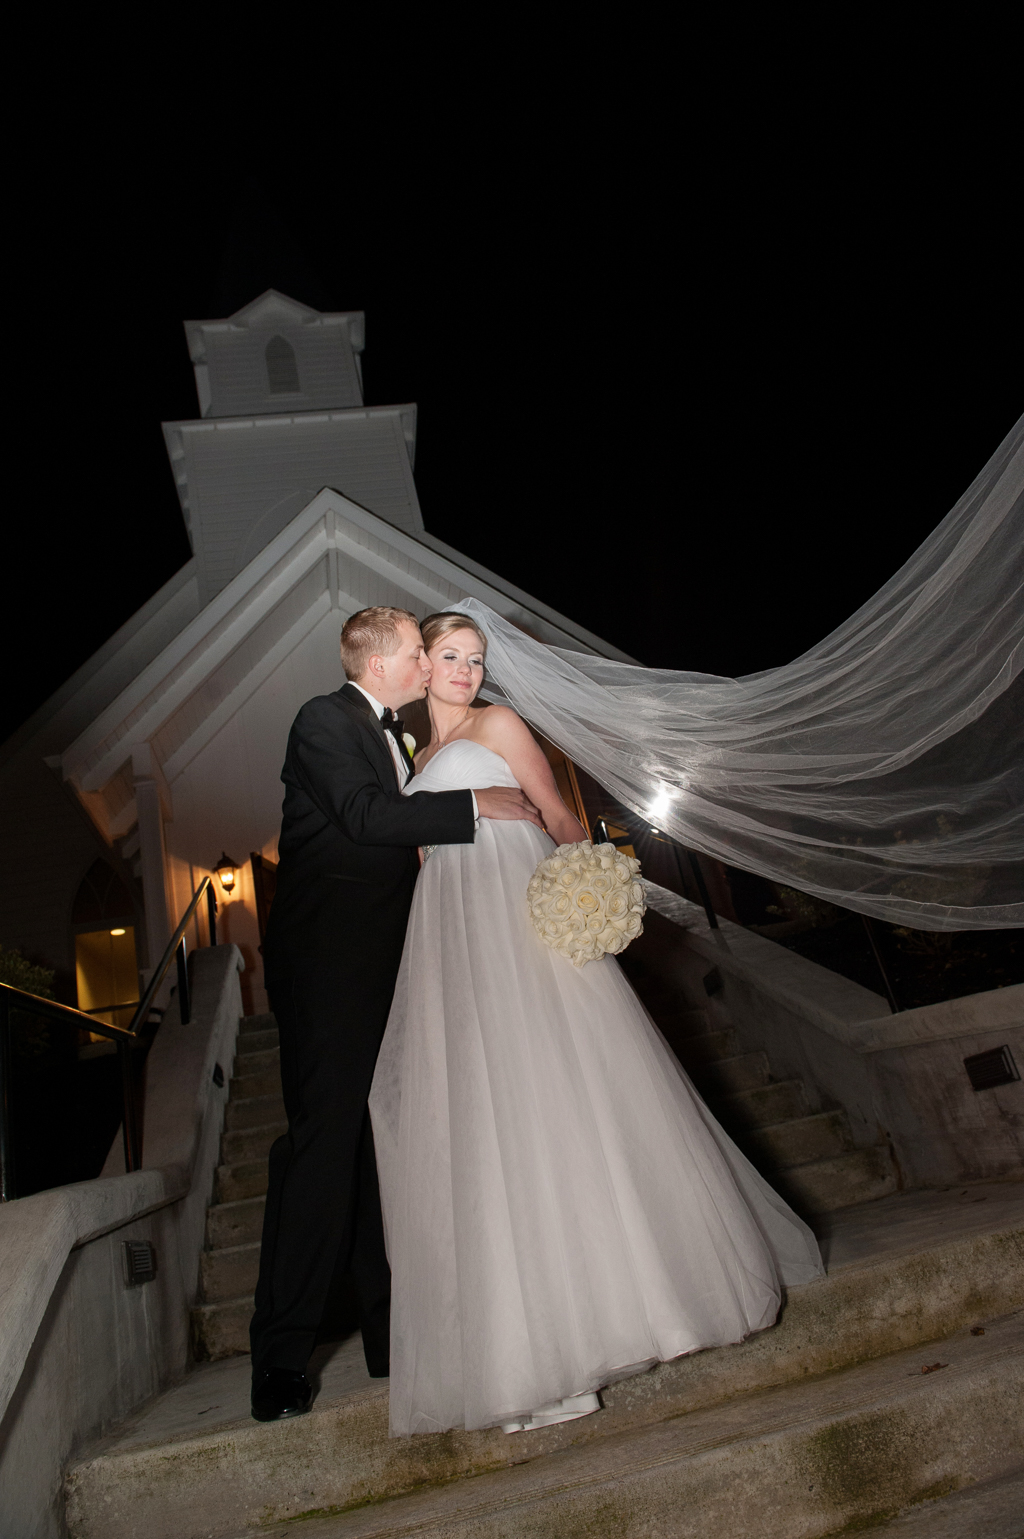 groom kisses bride in front of abernathy chapel and brides long veil flies in wind